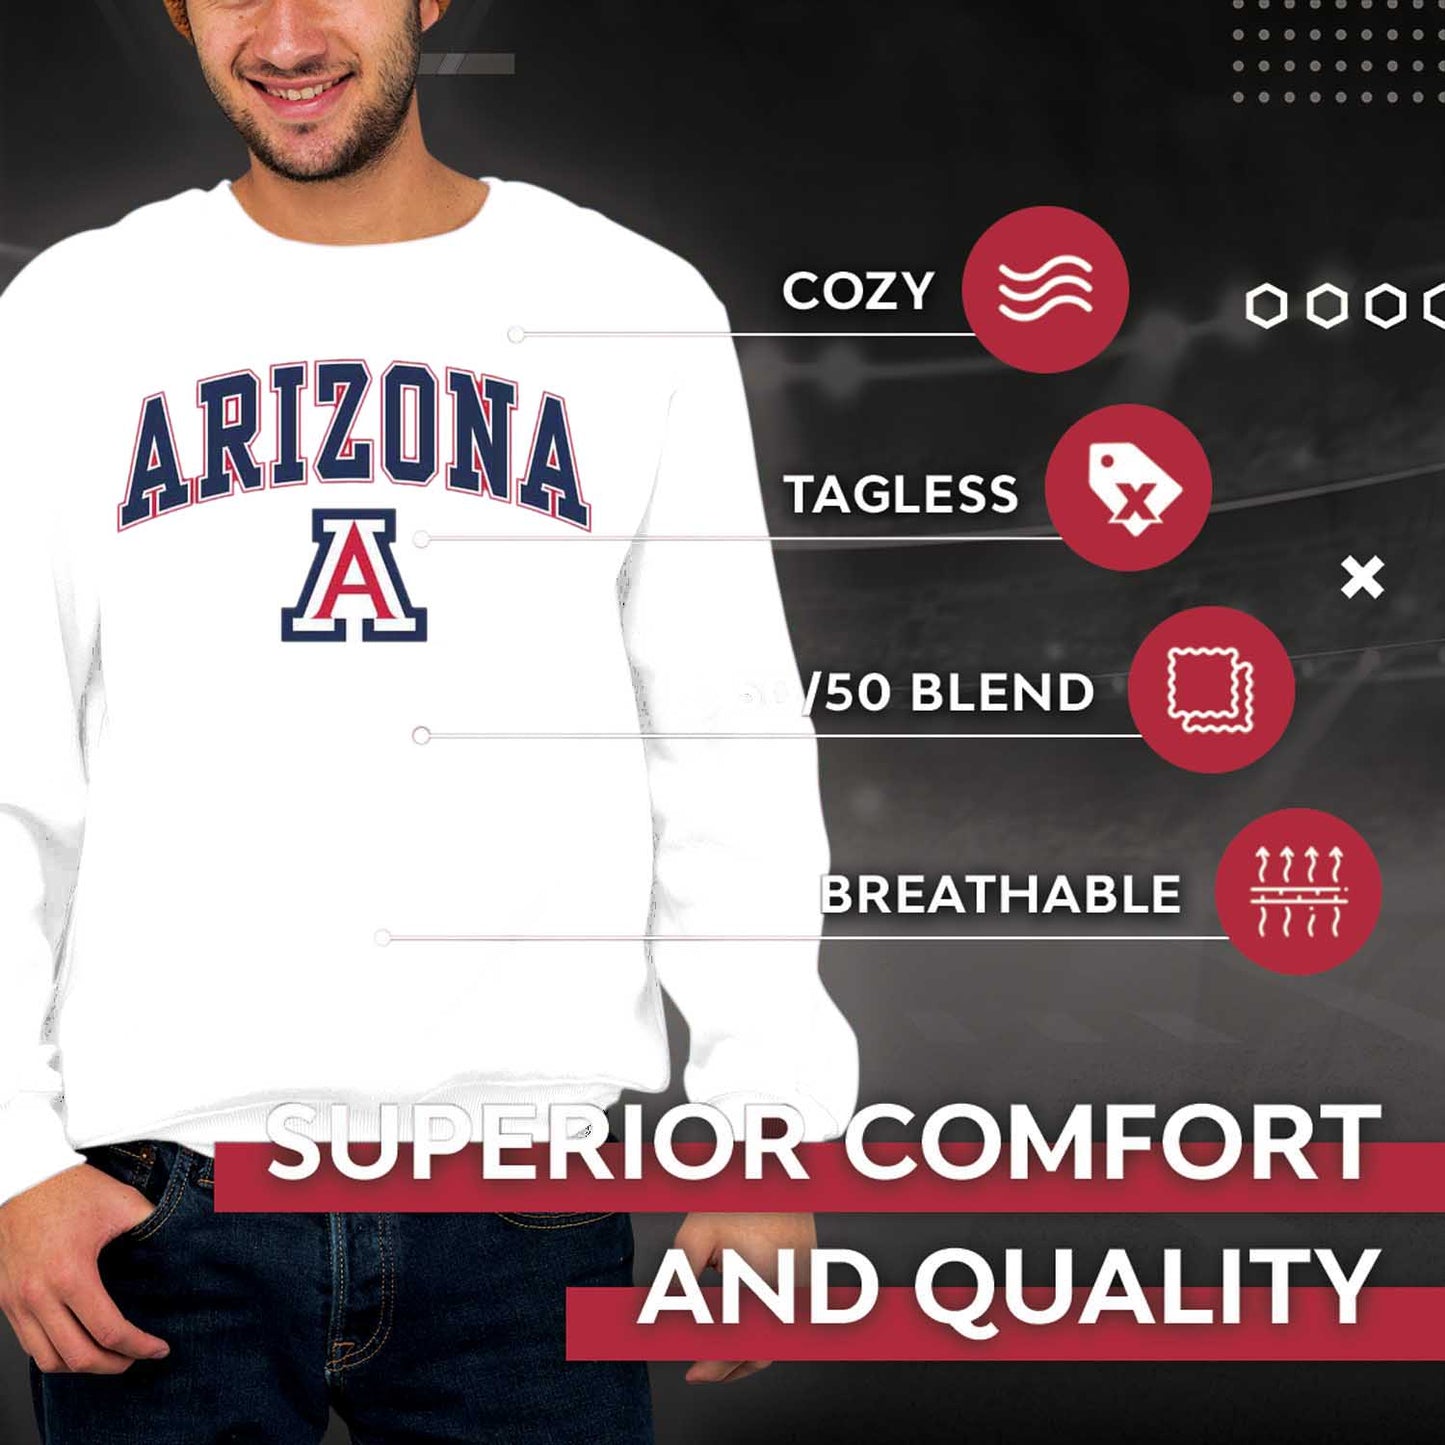 Arizona Wildcats Adult Arch & Logo Soft Style Gameday Crewneck Sweatshirt - White